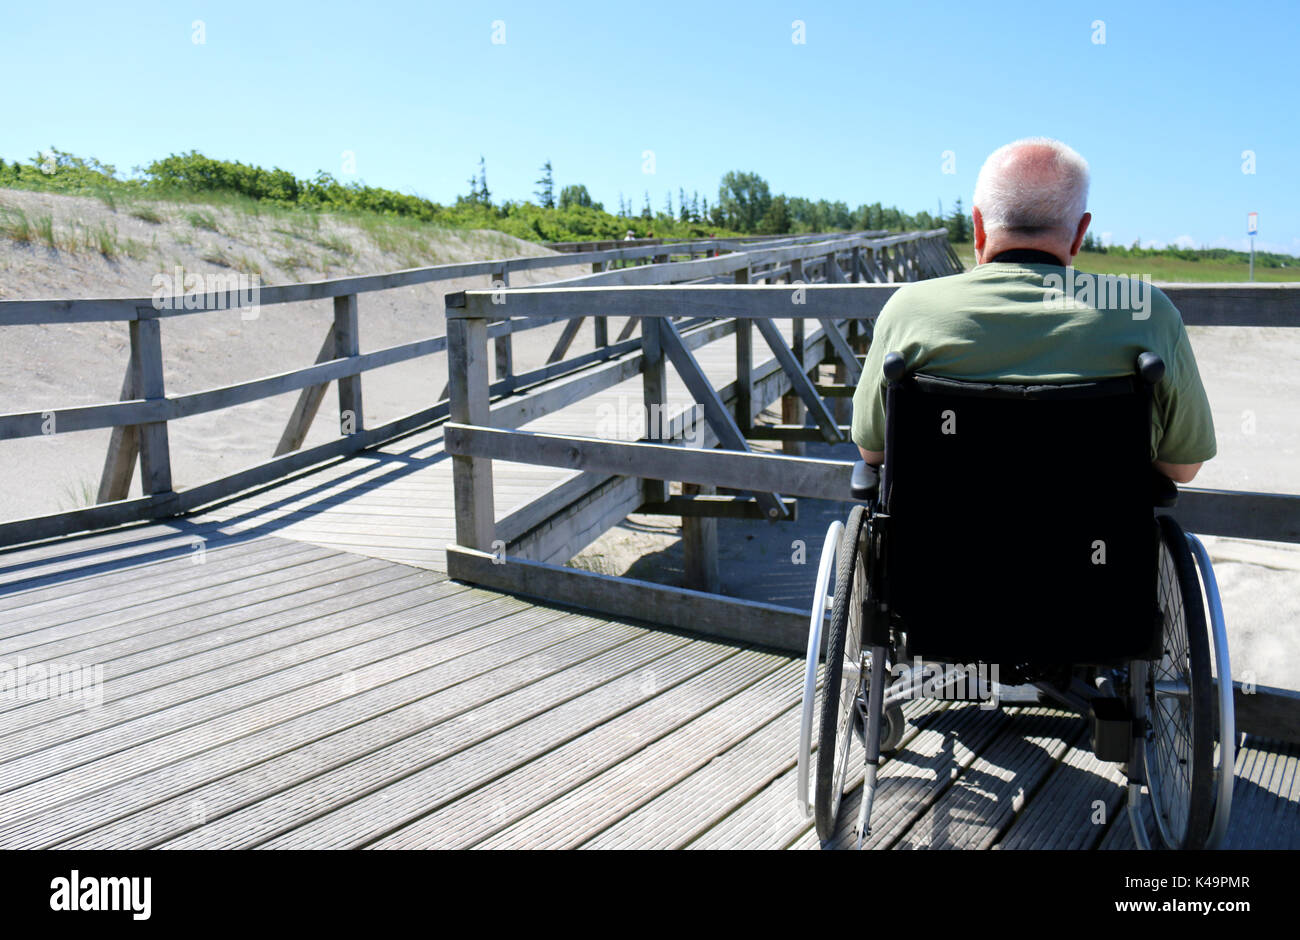 Accessability For Wheelchairs On The Beach Stock Photo